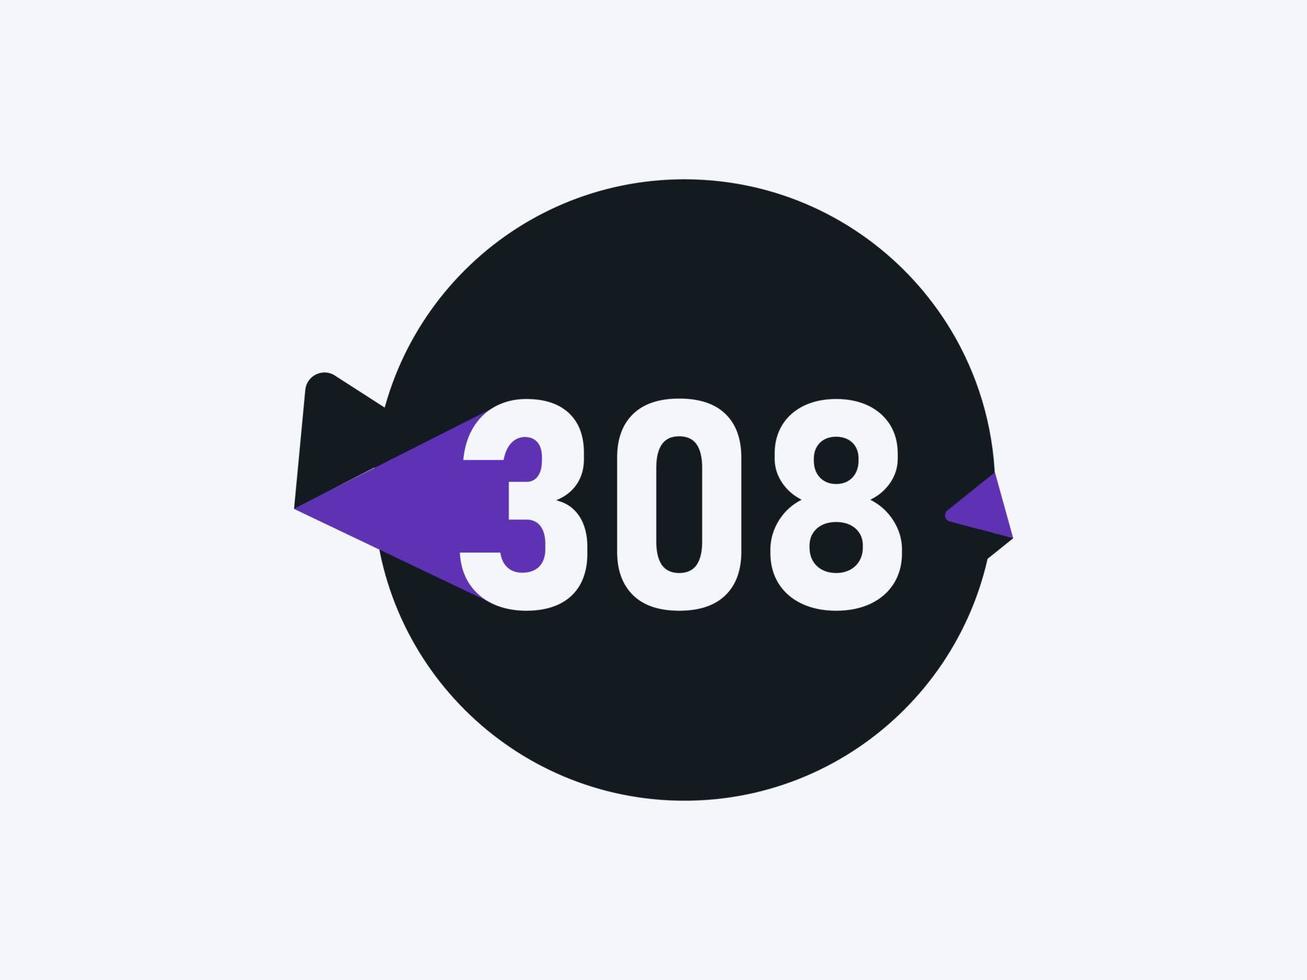 308 Number logo icon design vector image. Number logo icon design vector image